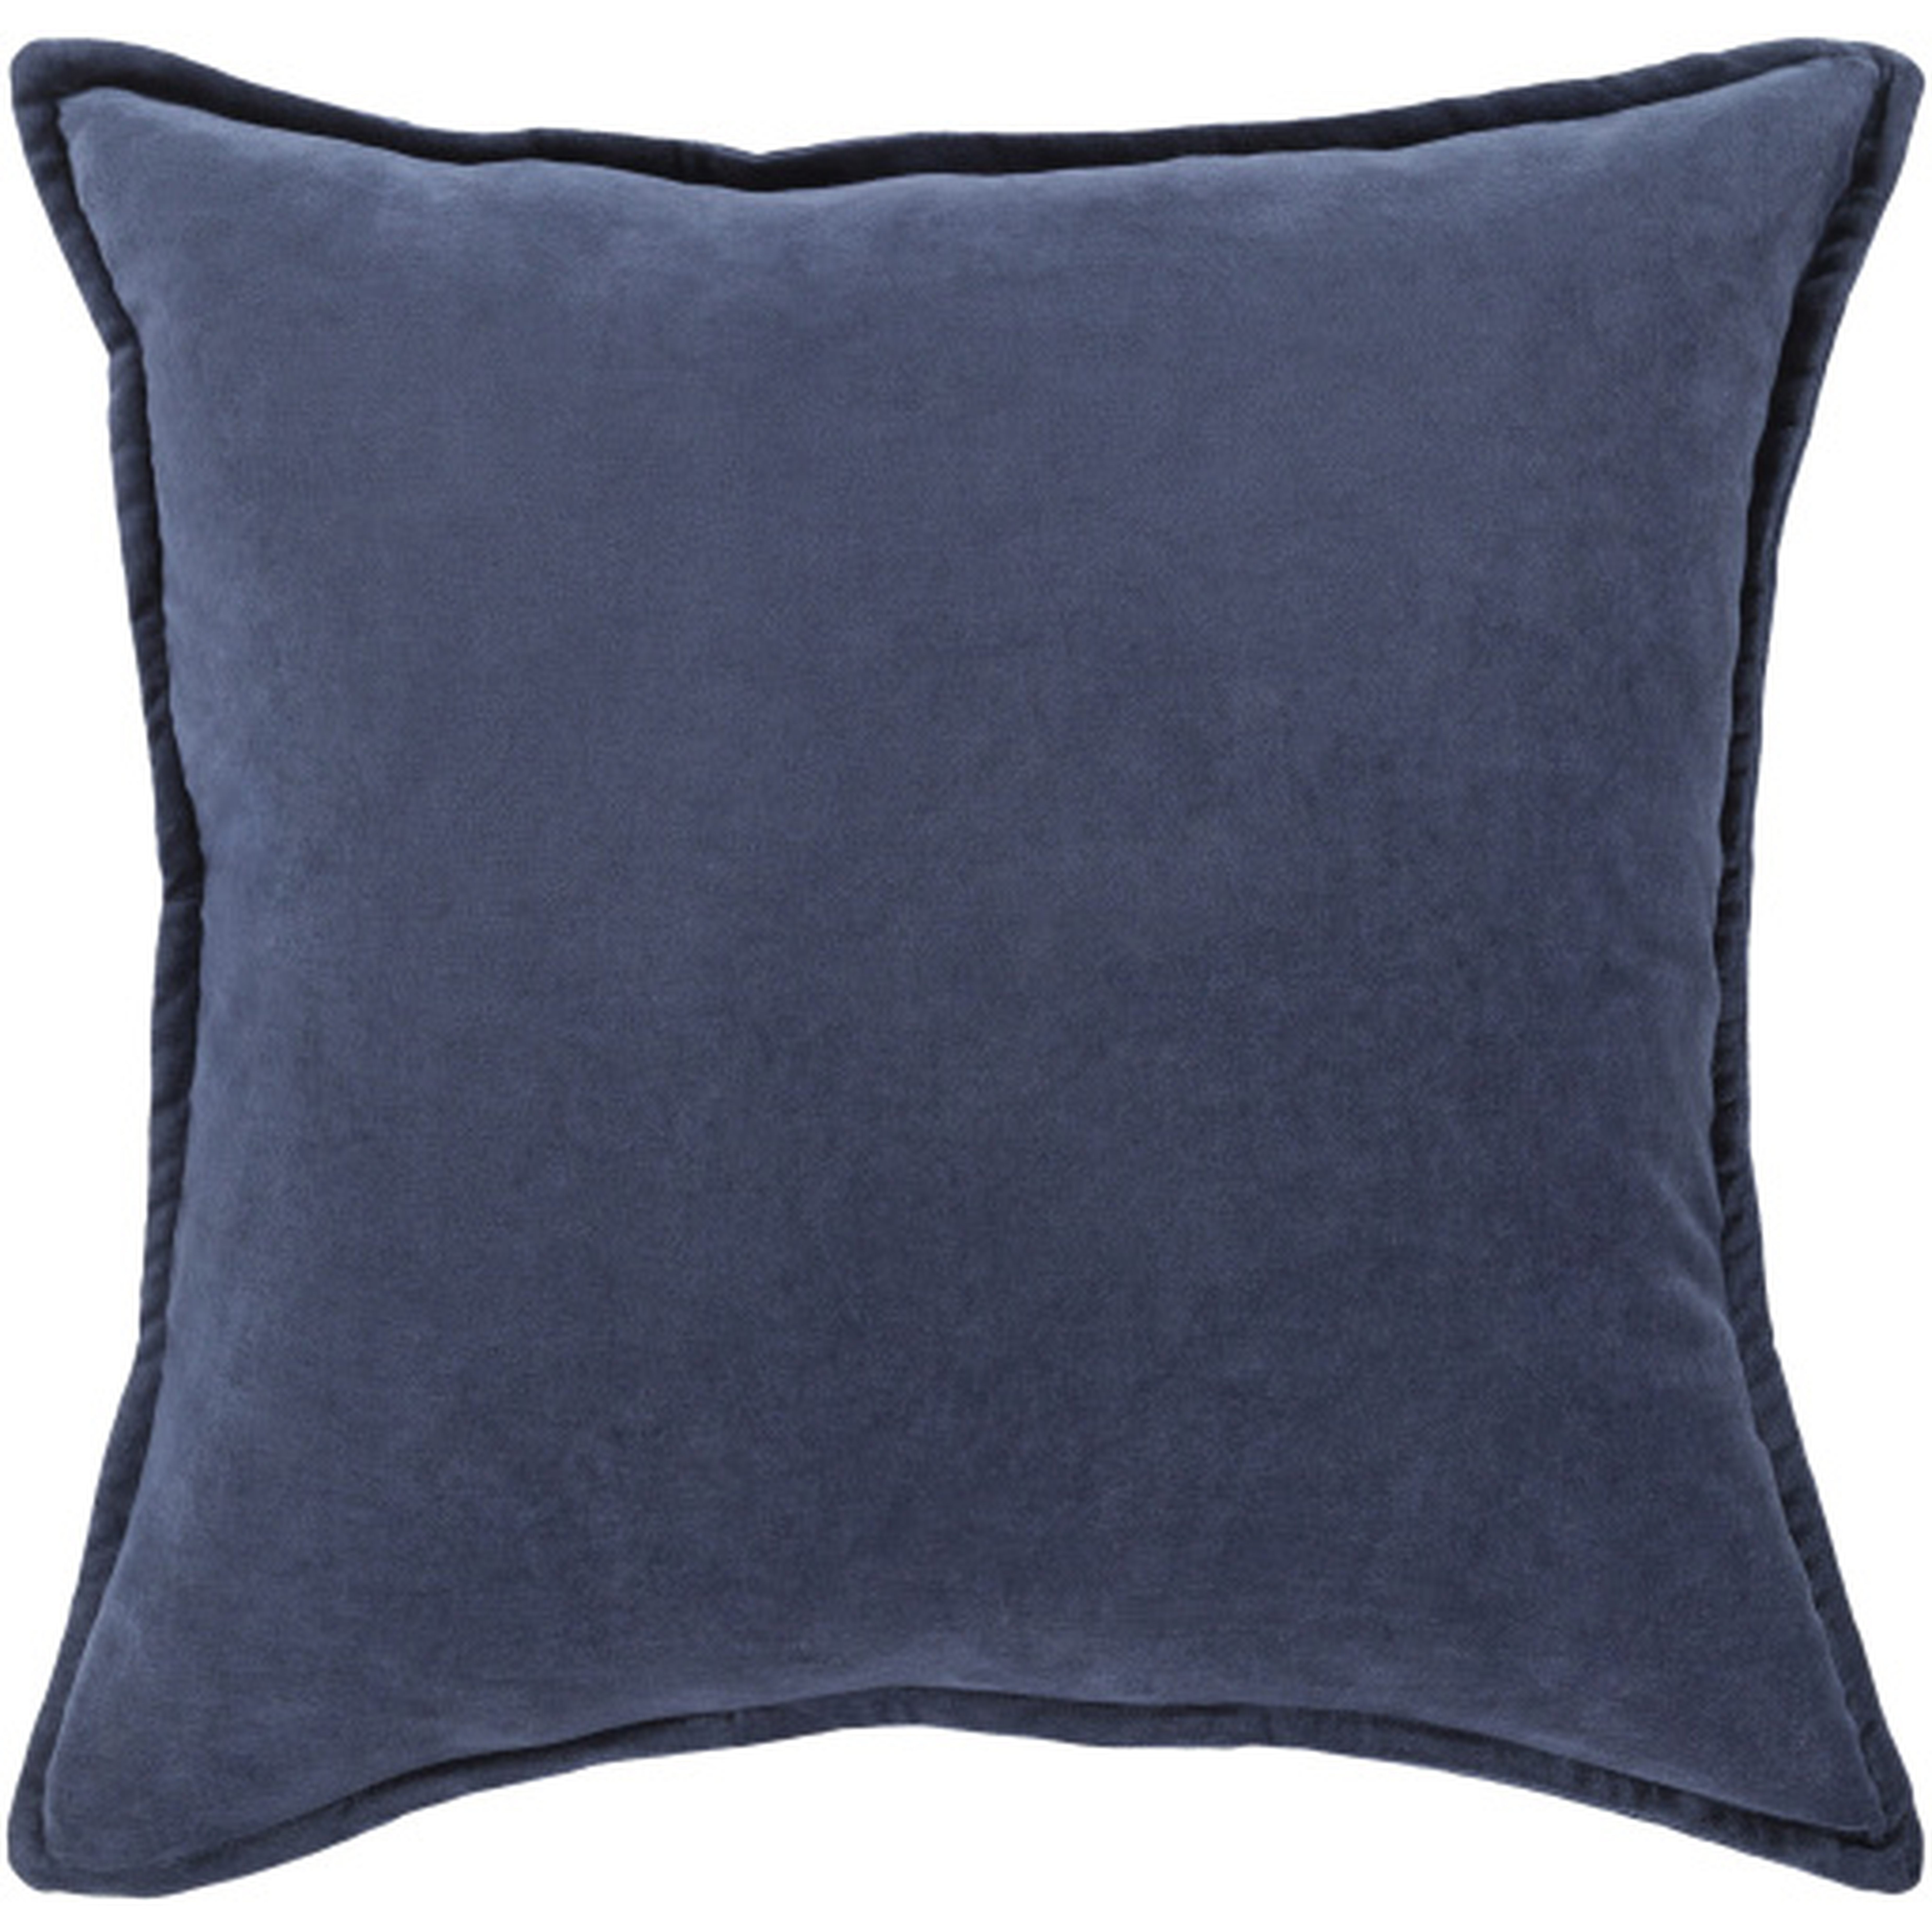 Cotton Velvet Pillow, Navy, Poly Insert, 20" x 20" - Surya